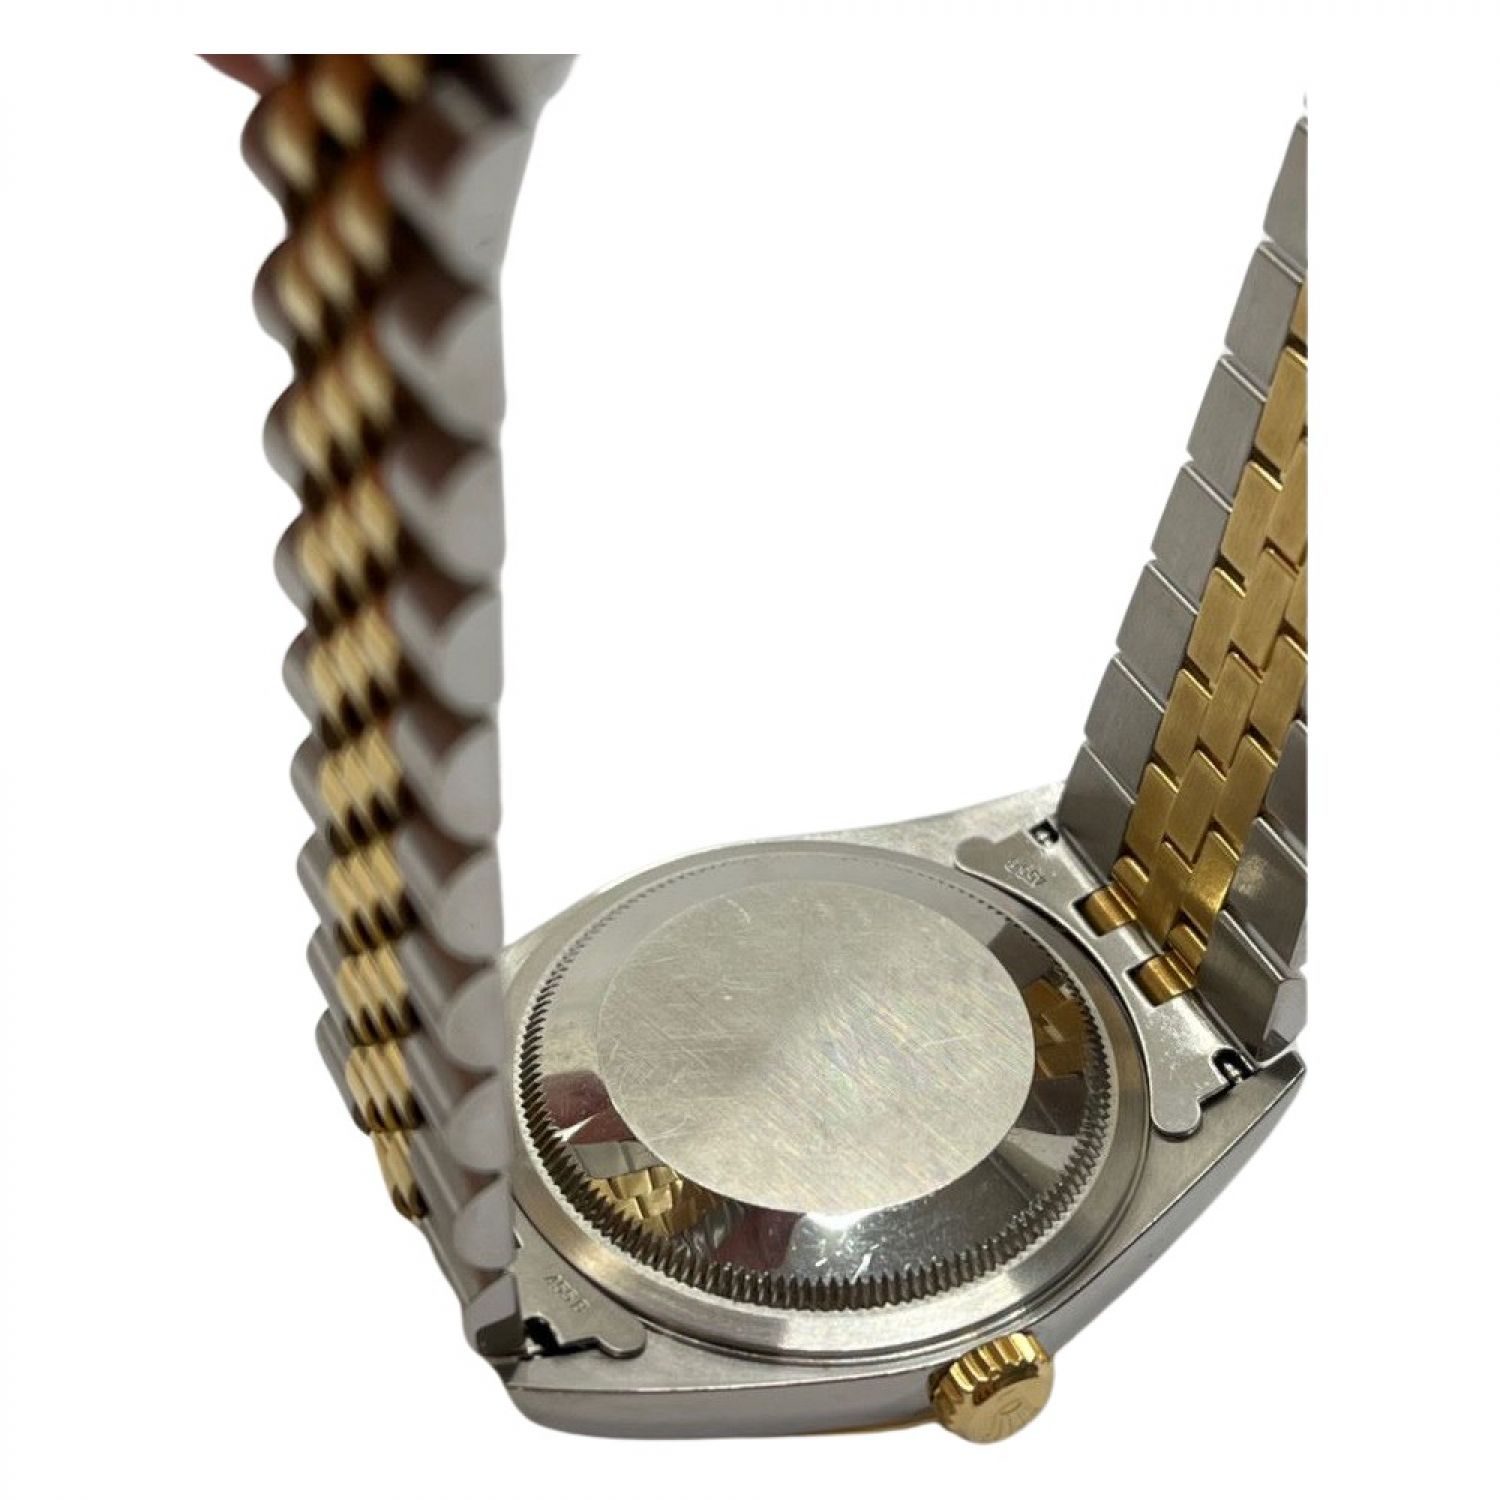 ROLEX ロレックス メンズ腕時計 デイトジャスト 16233 ブルーコンピューター文字盤 S番（1993年製）OH済【】